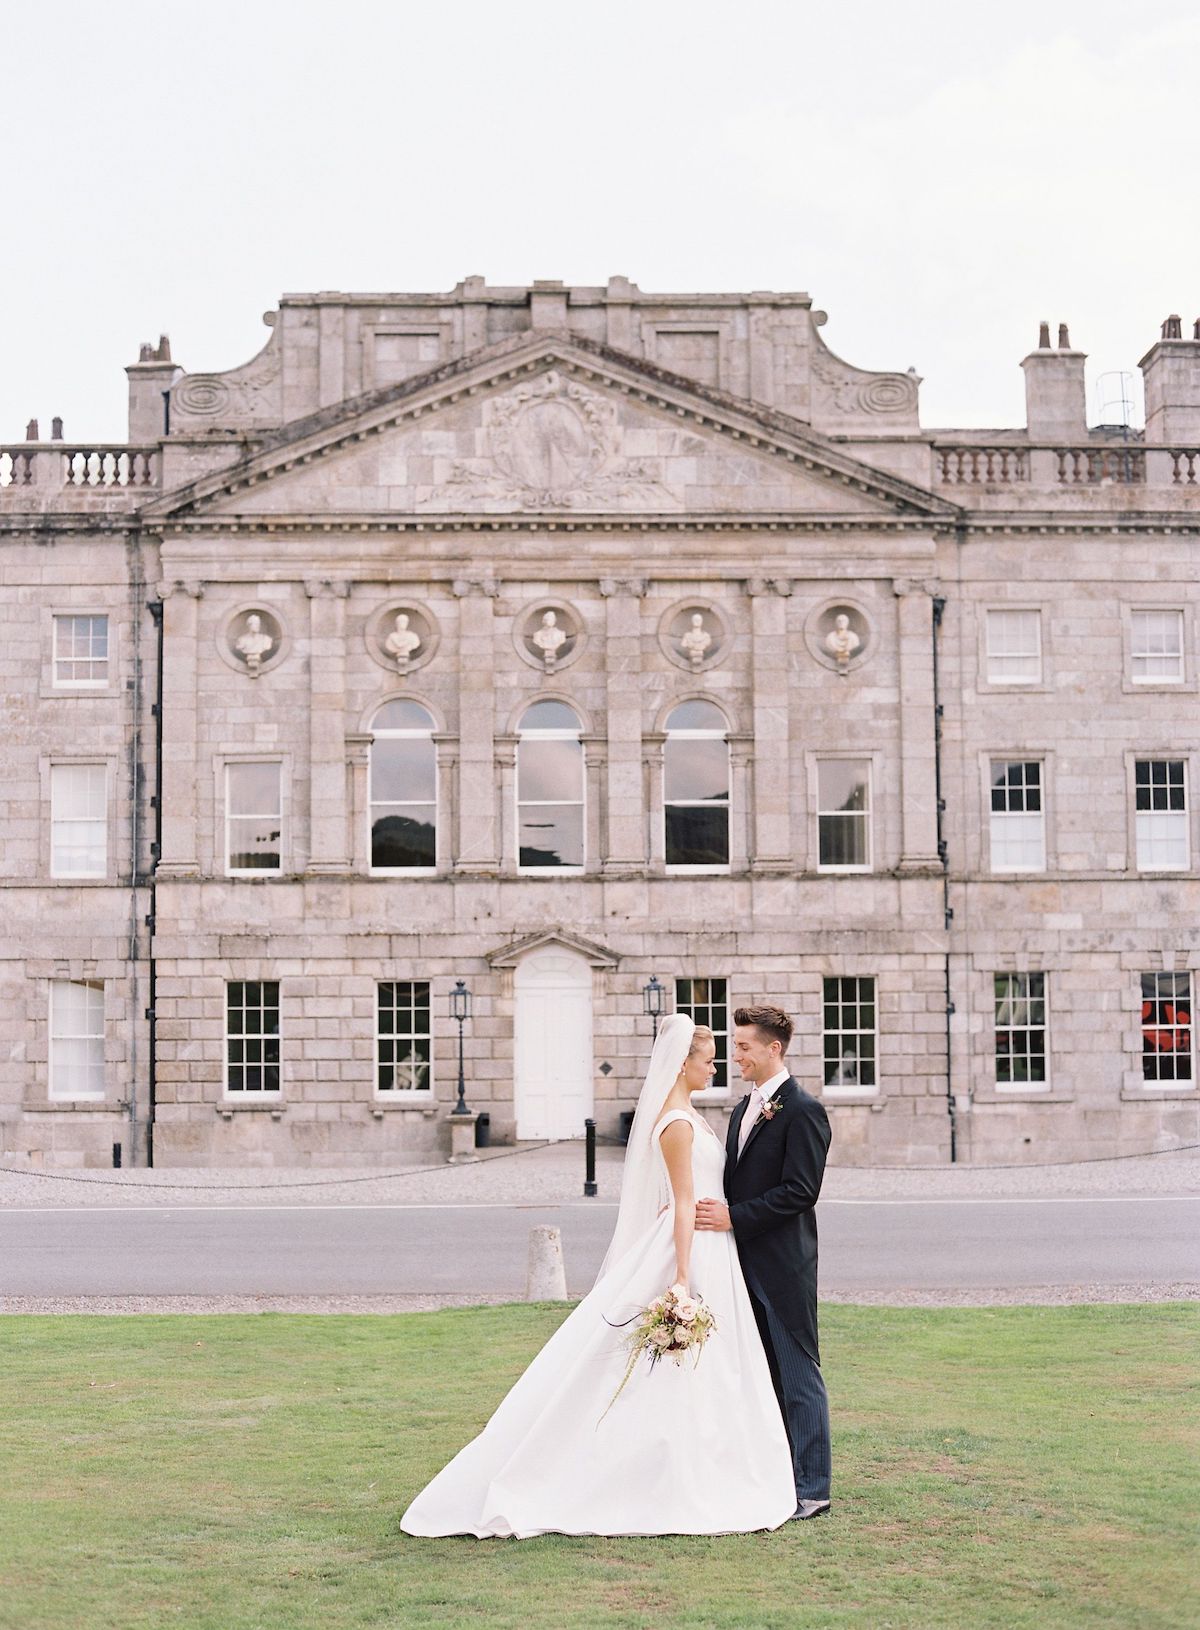 Manor House Wedding Venues in Ireland - Powerscourt